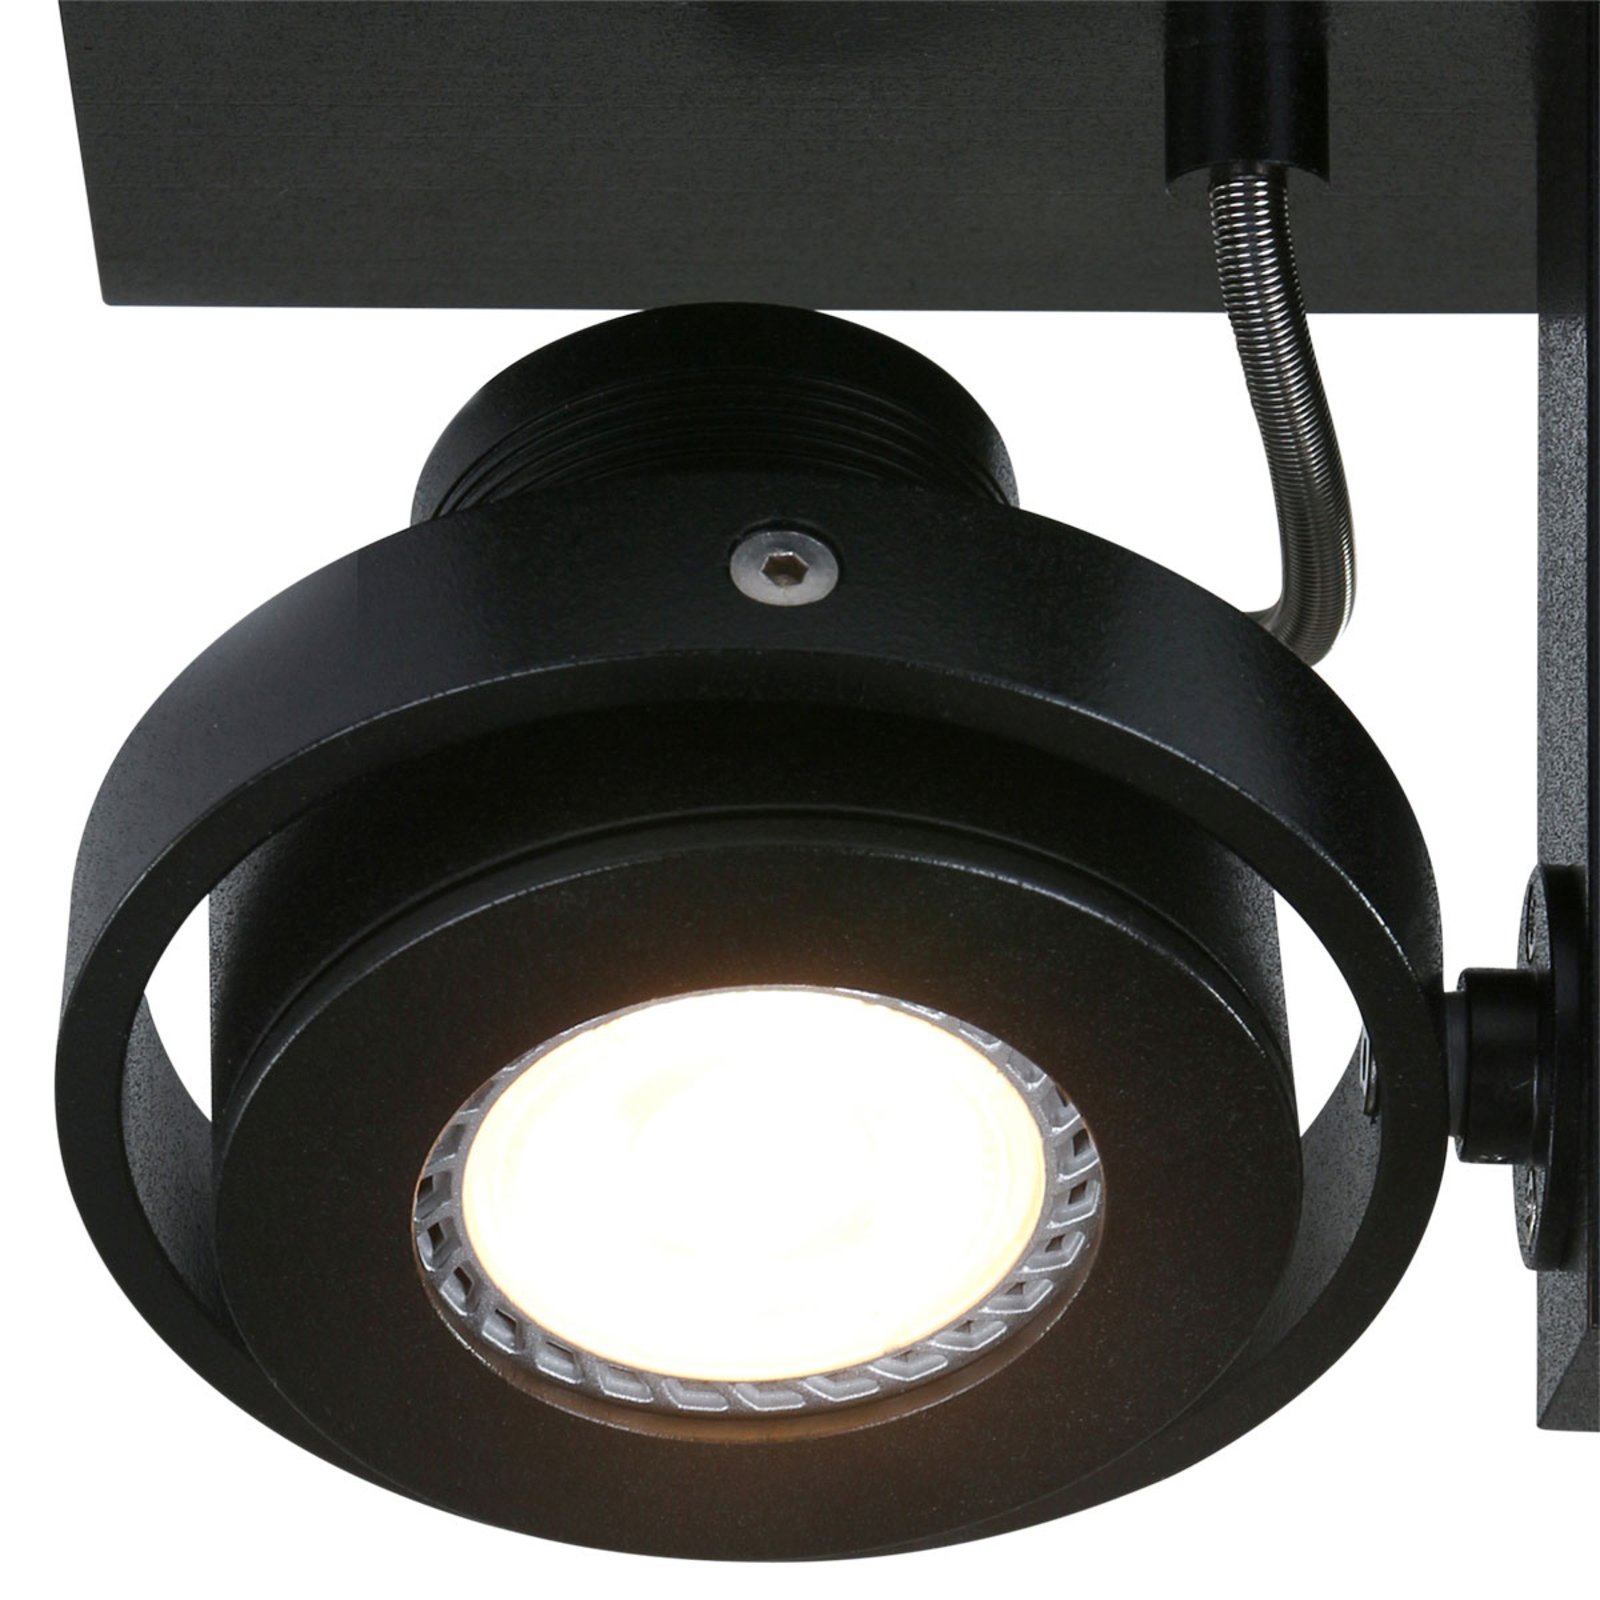 LED reflektor Westpoint 1fl. črna